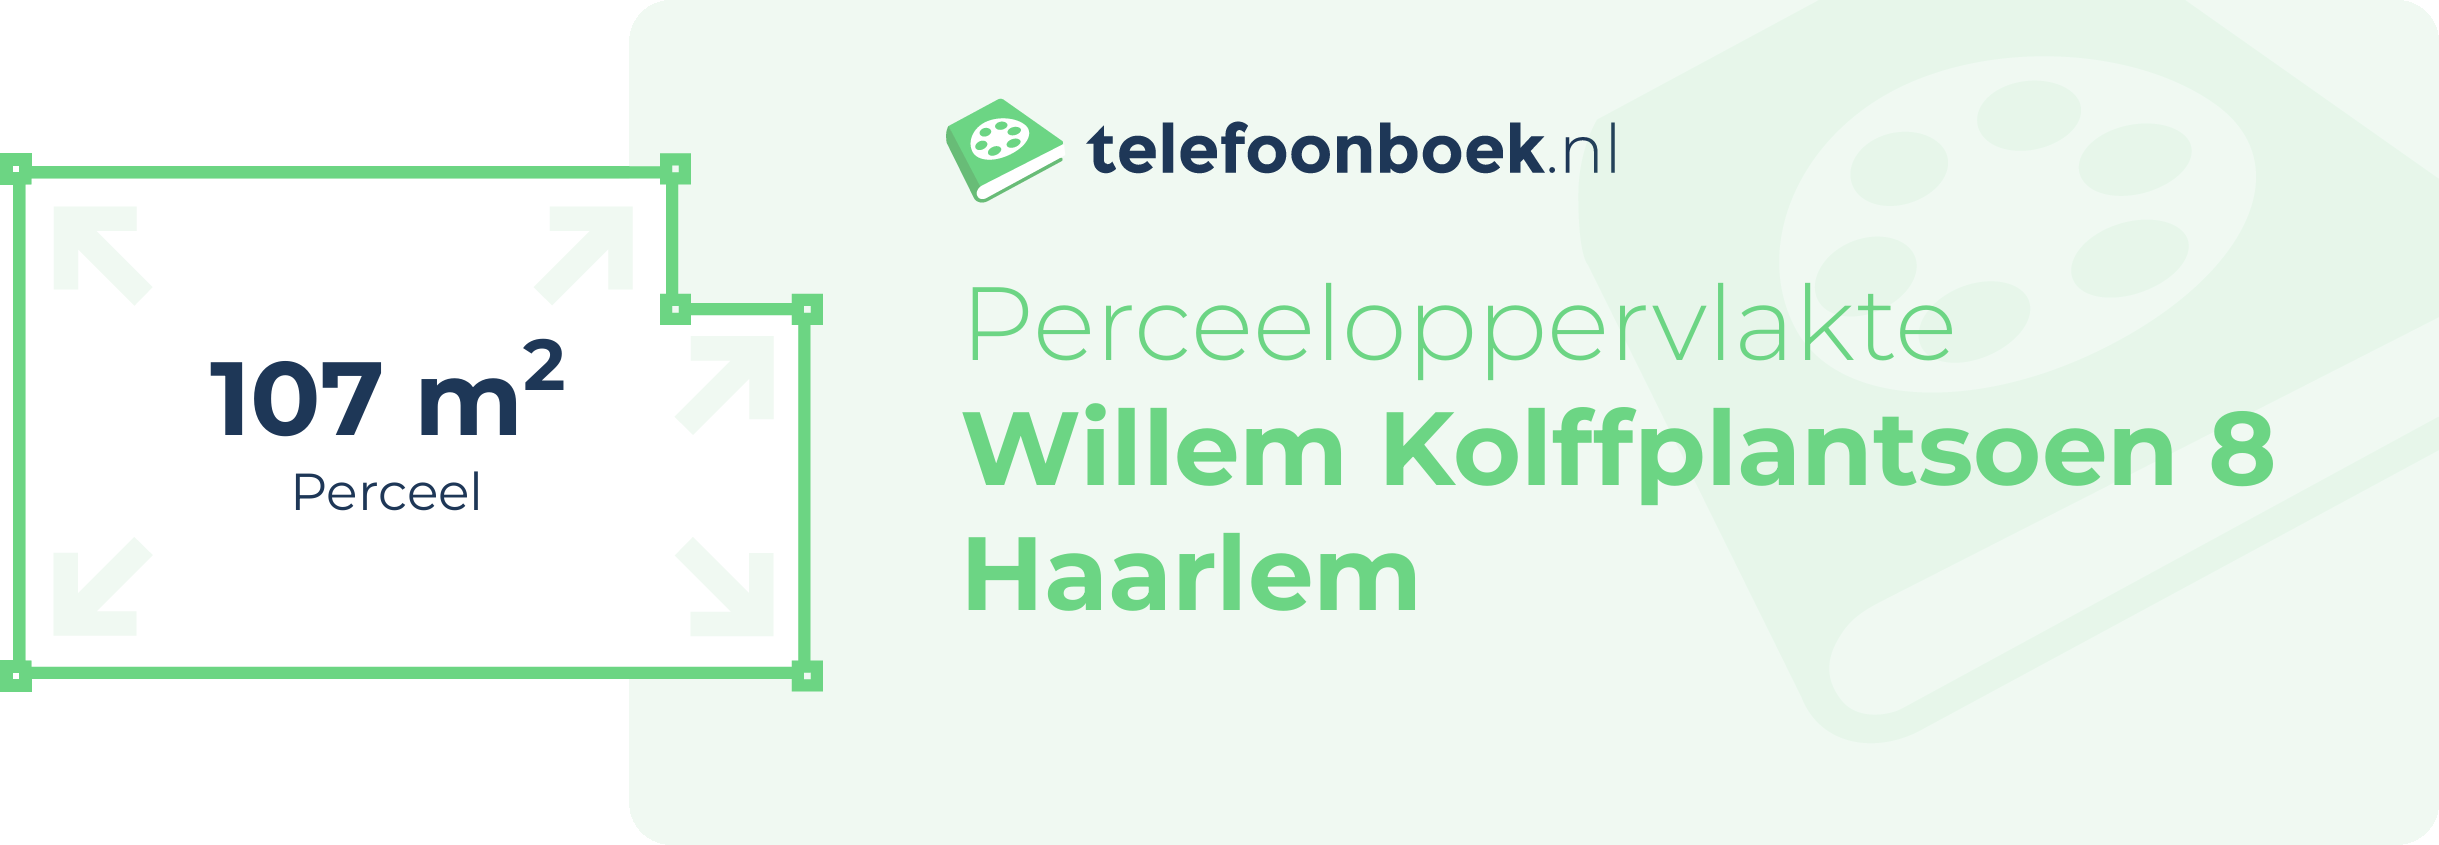 Perceeloppervlakte Willem Kolffplantsoen 8 Haarlem